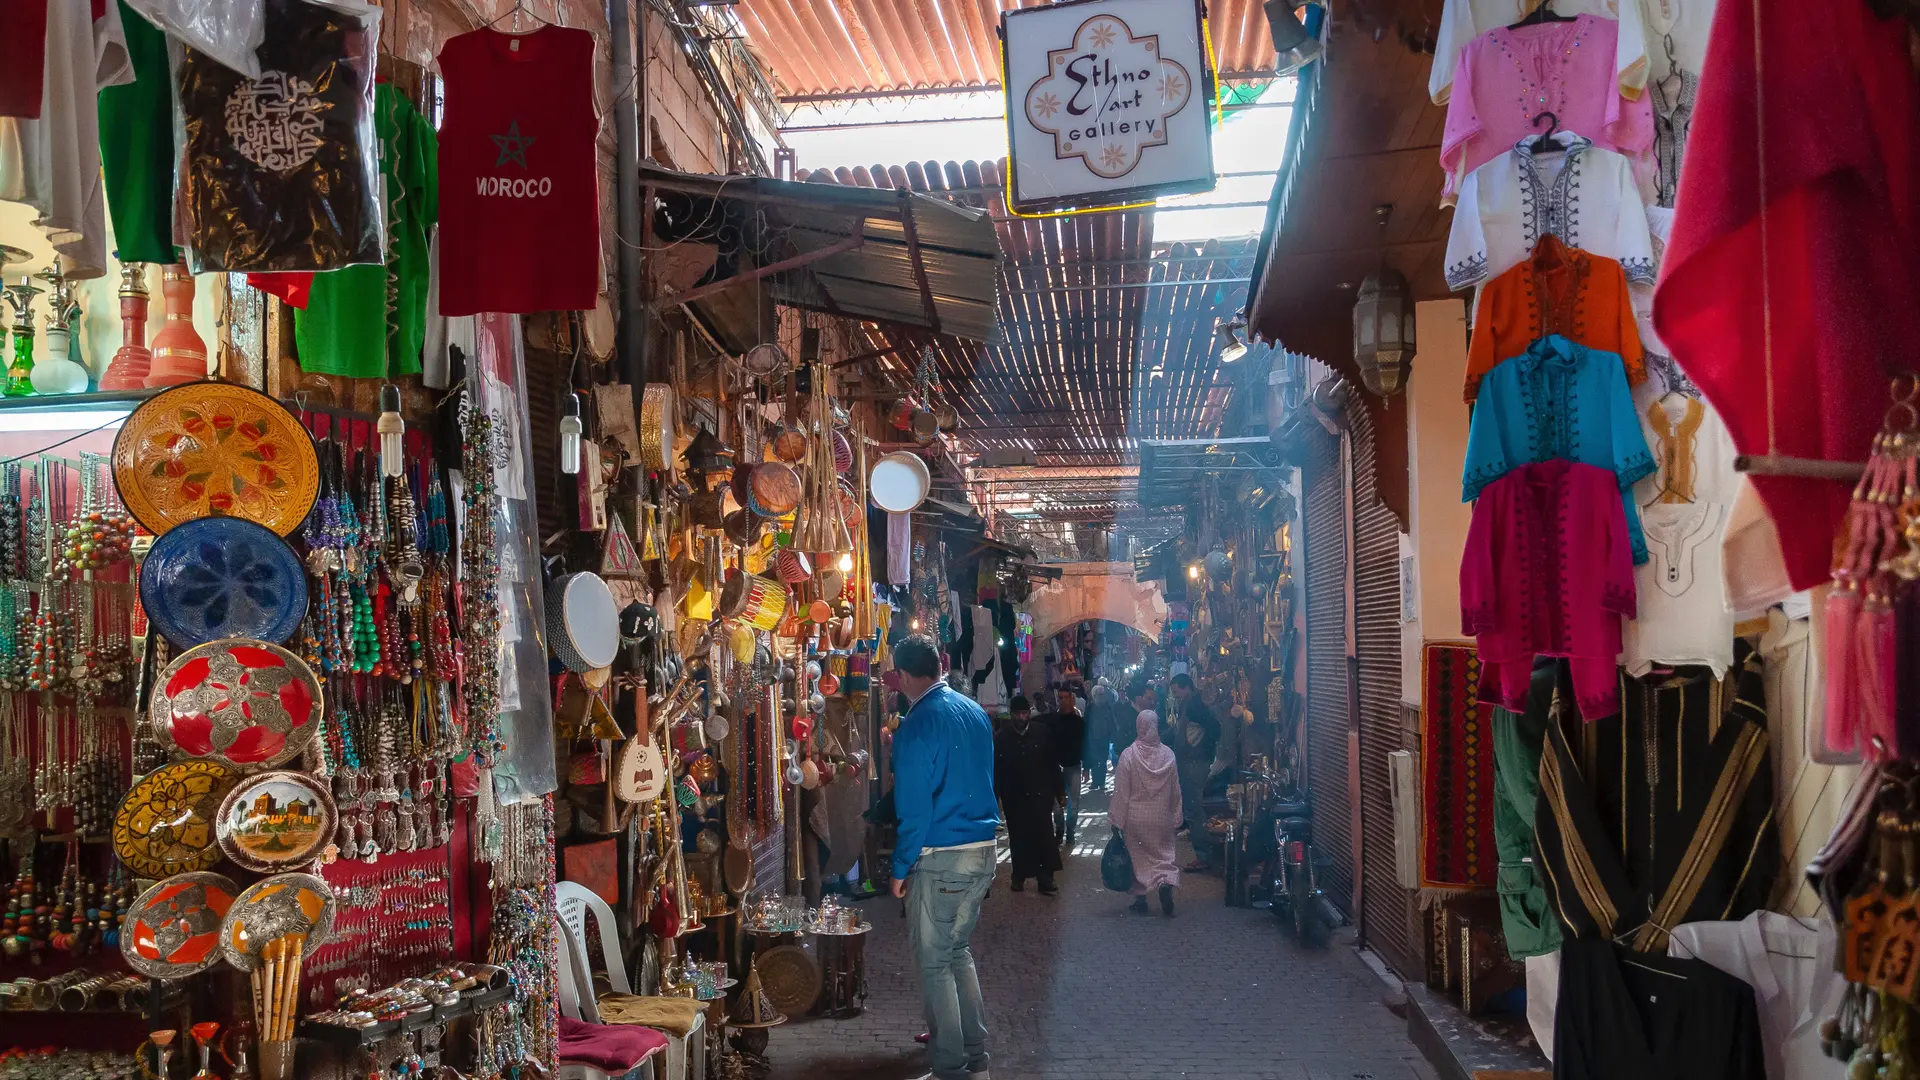 Moroccan market with people walking between. Man in blue jacket.